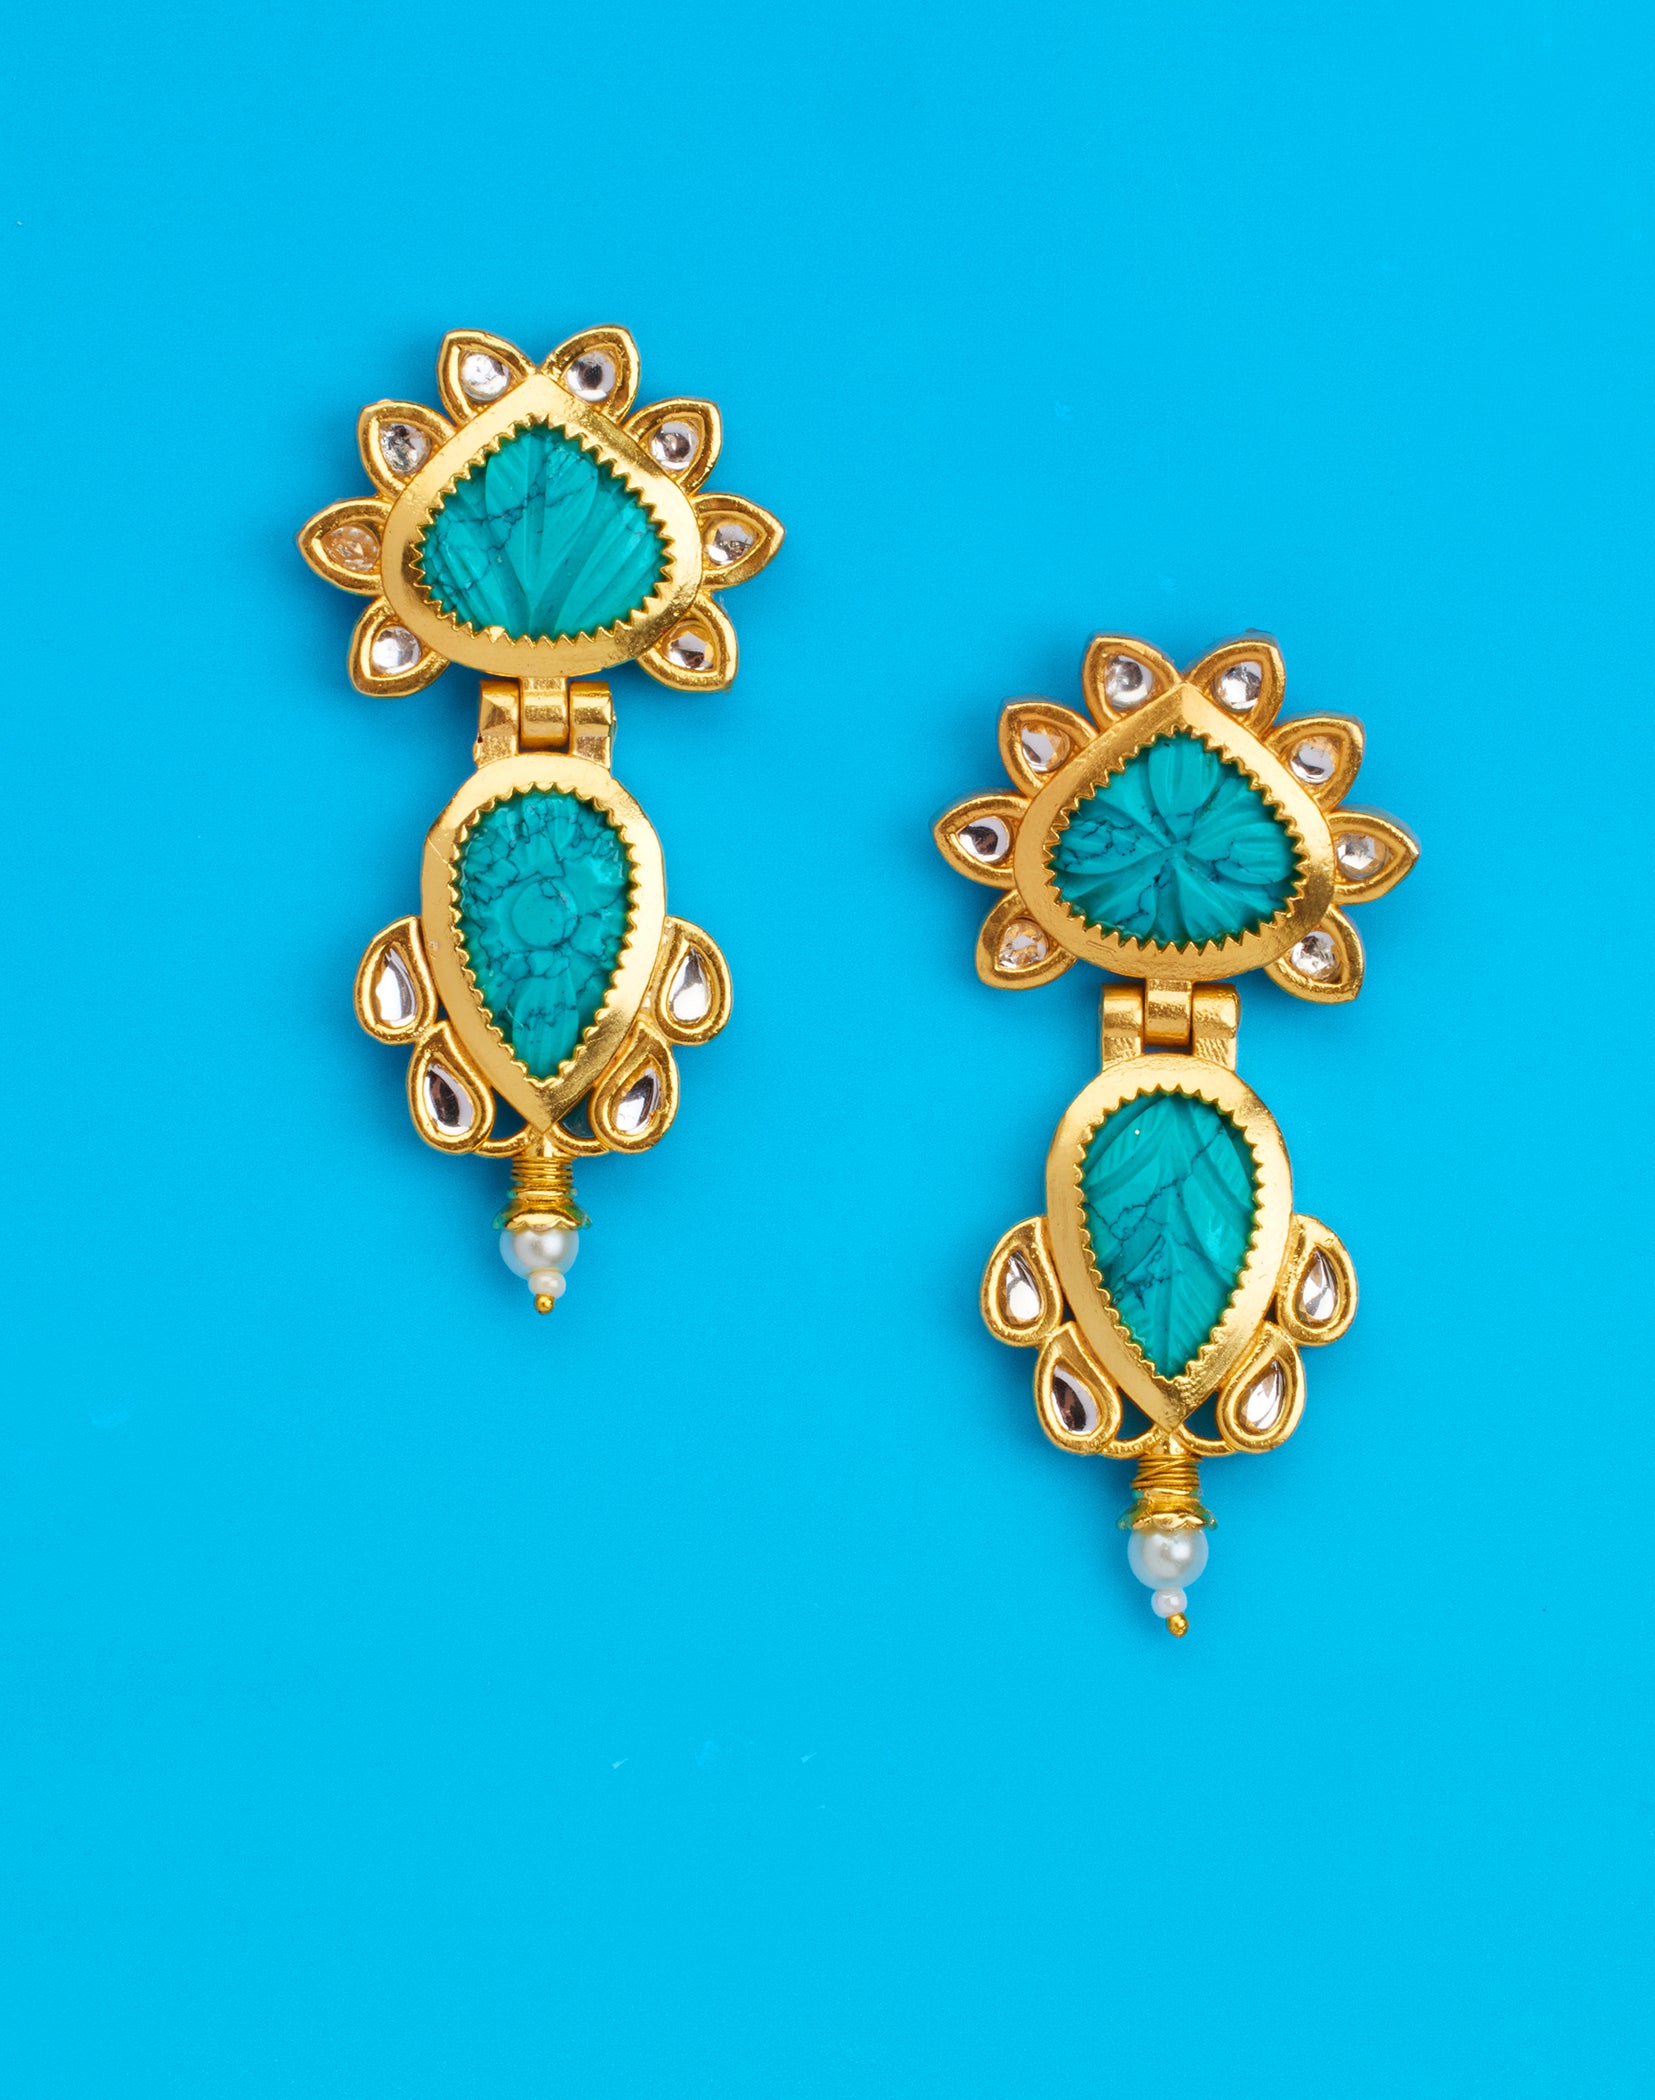 Mini Preston Earrings in Turquoise Colored Stone